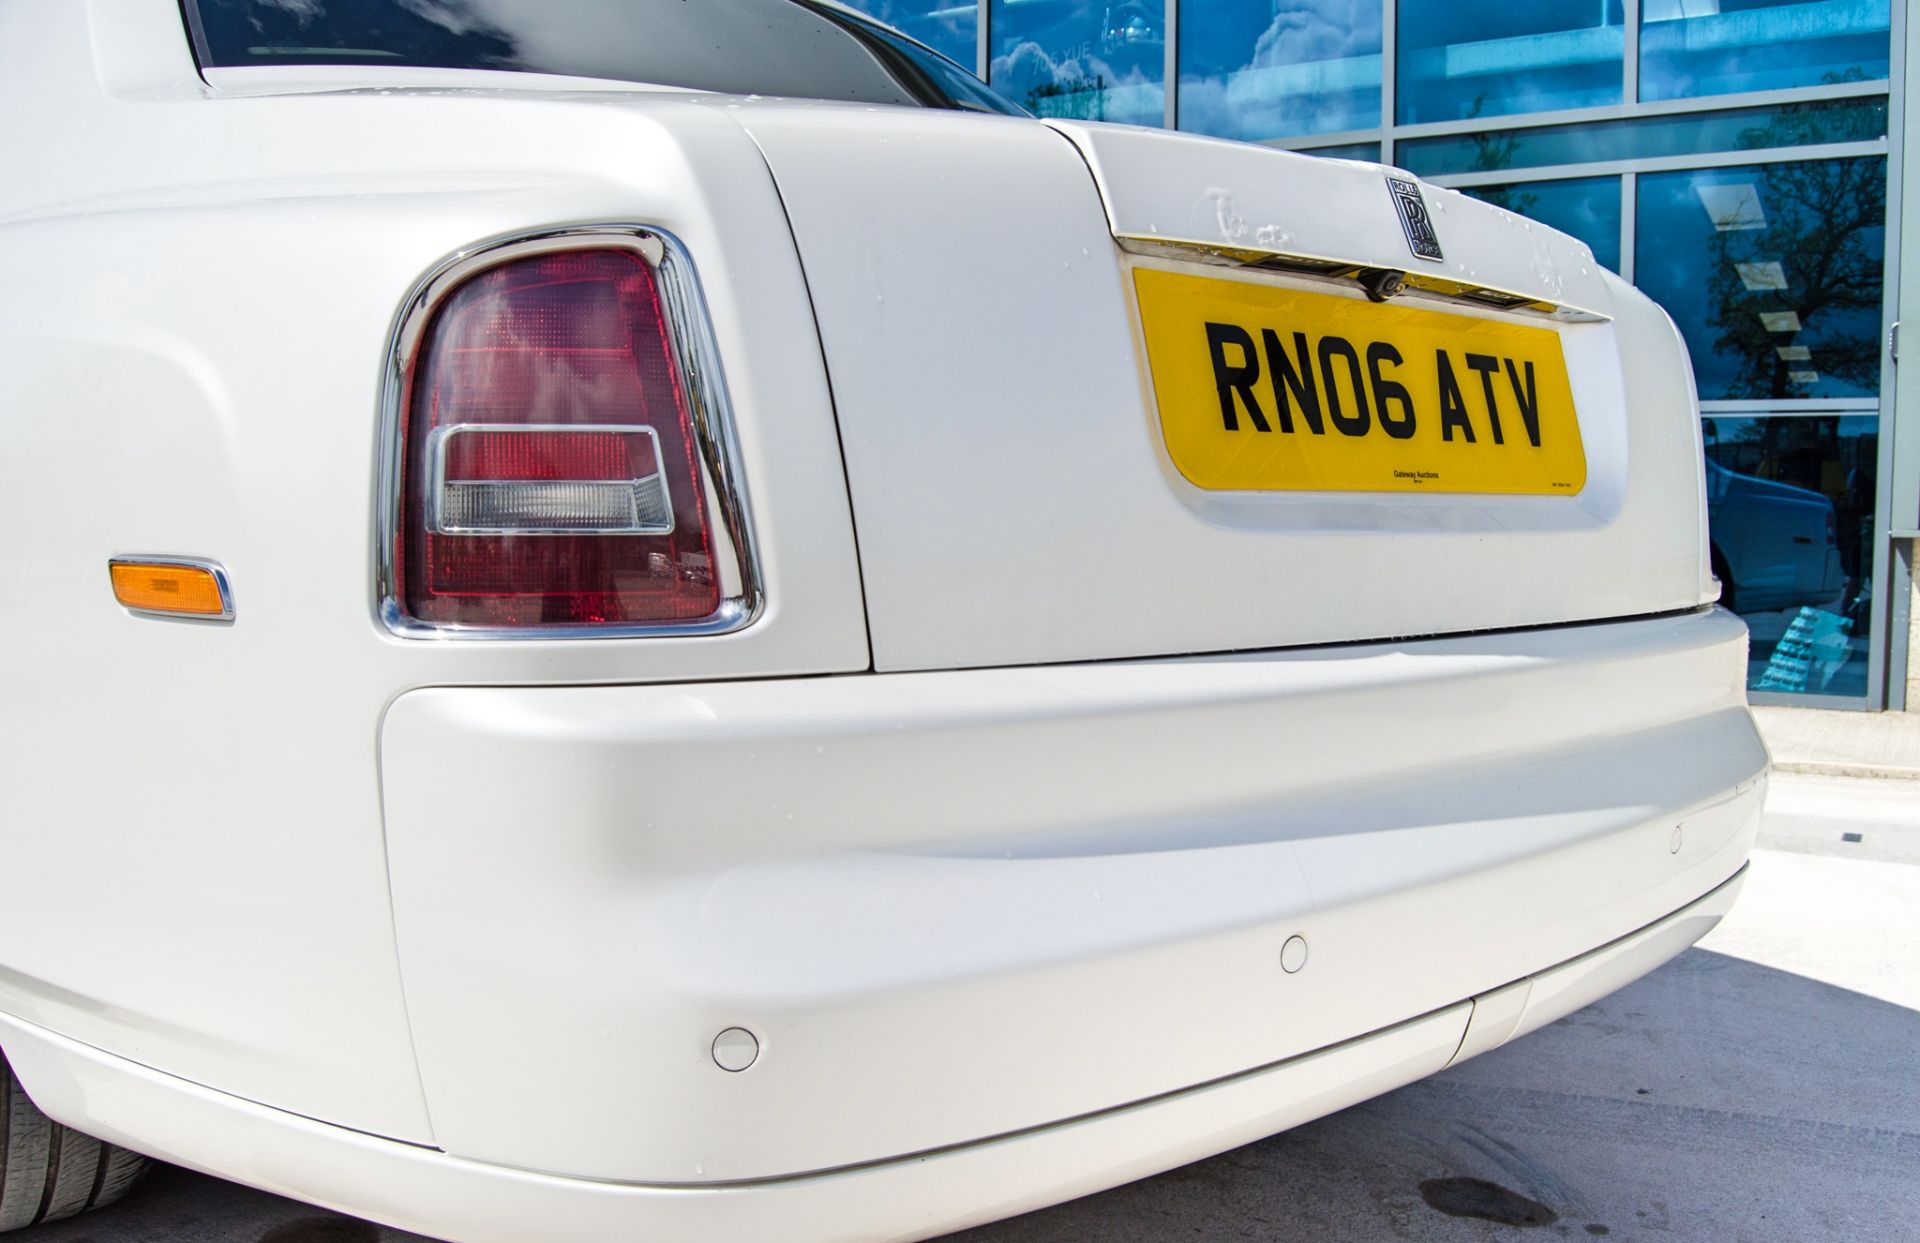 Rolls Royce Phantom 6749cc V12 Auto 4 door saloon car Registration Number: RN06 ATV Date of - Image 24 of 52